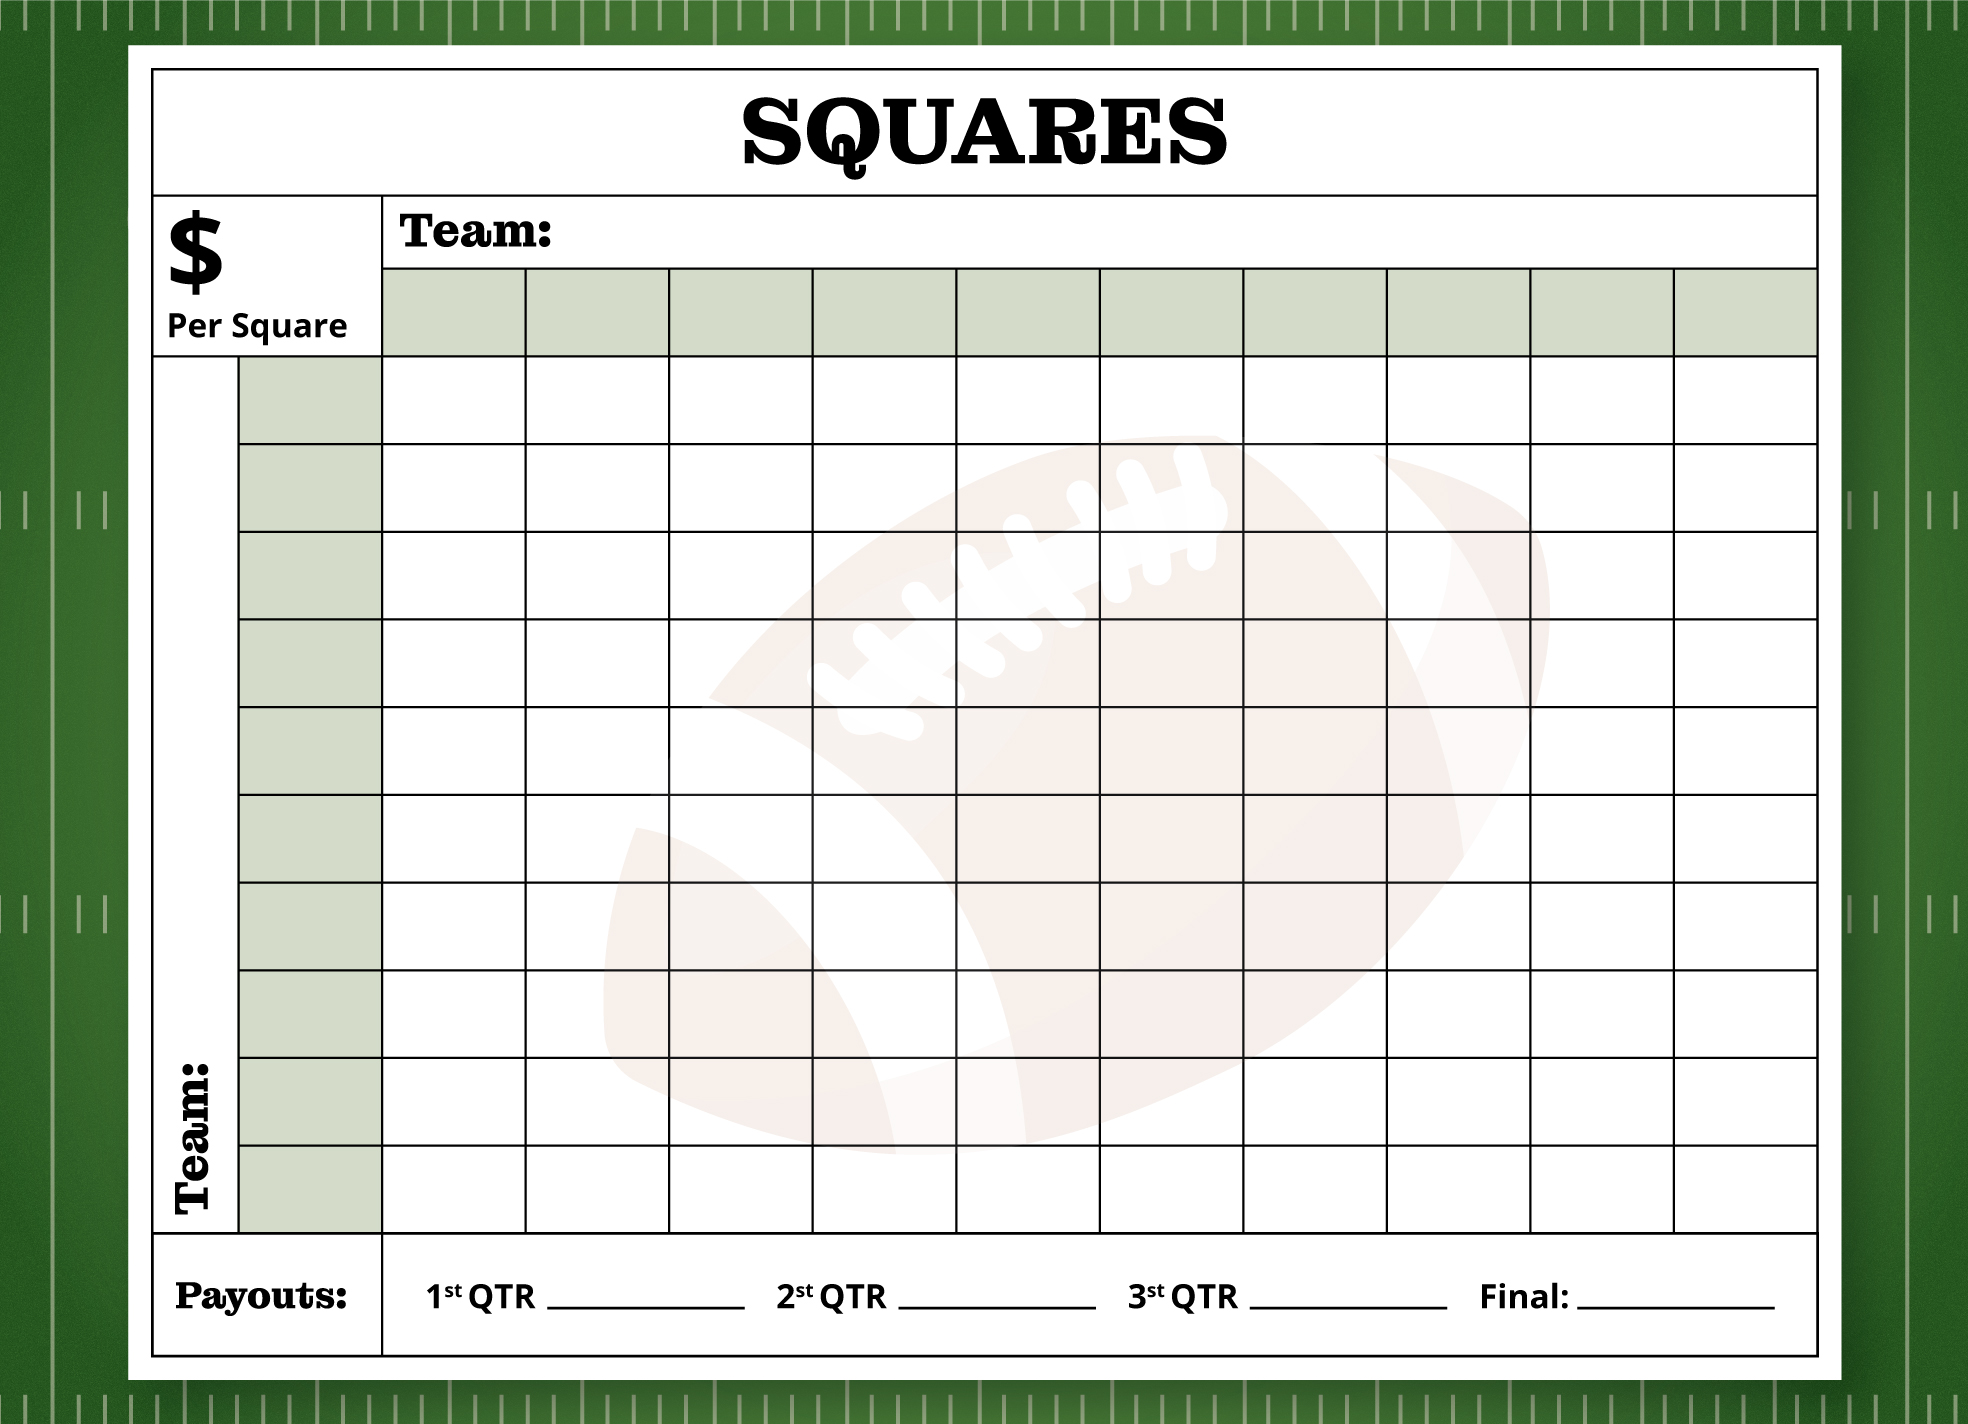 squares football betting